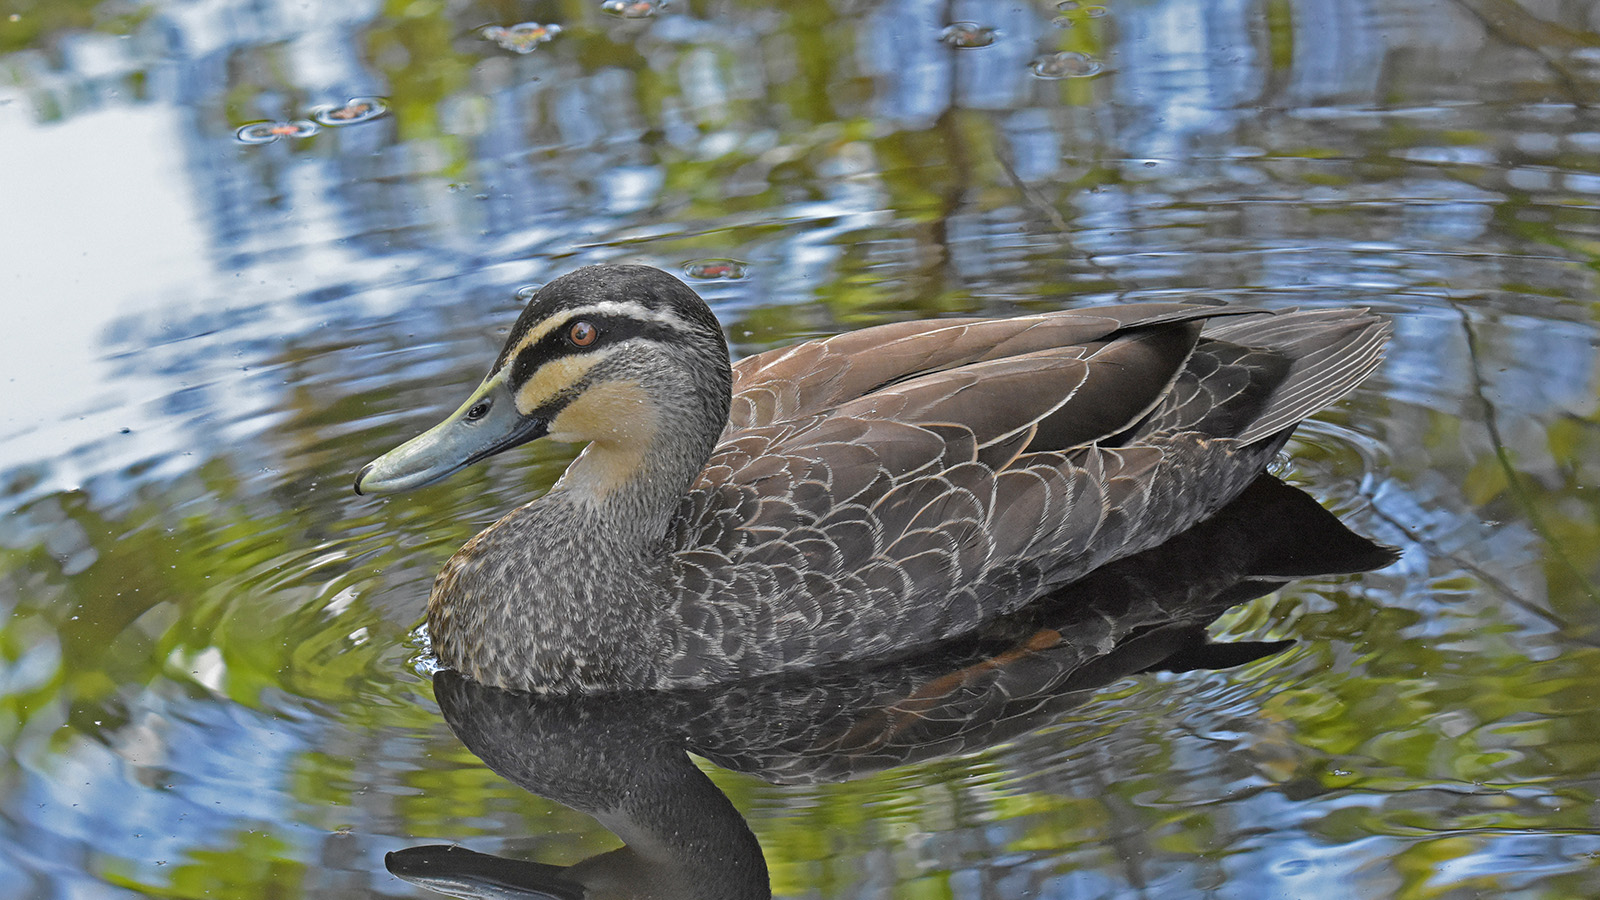 Fauna: Black duck on water